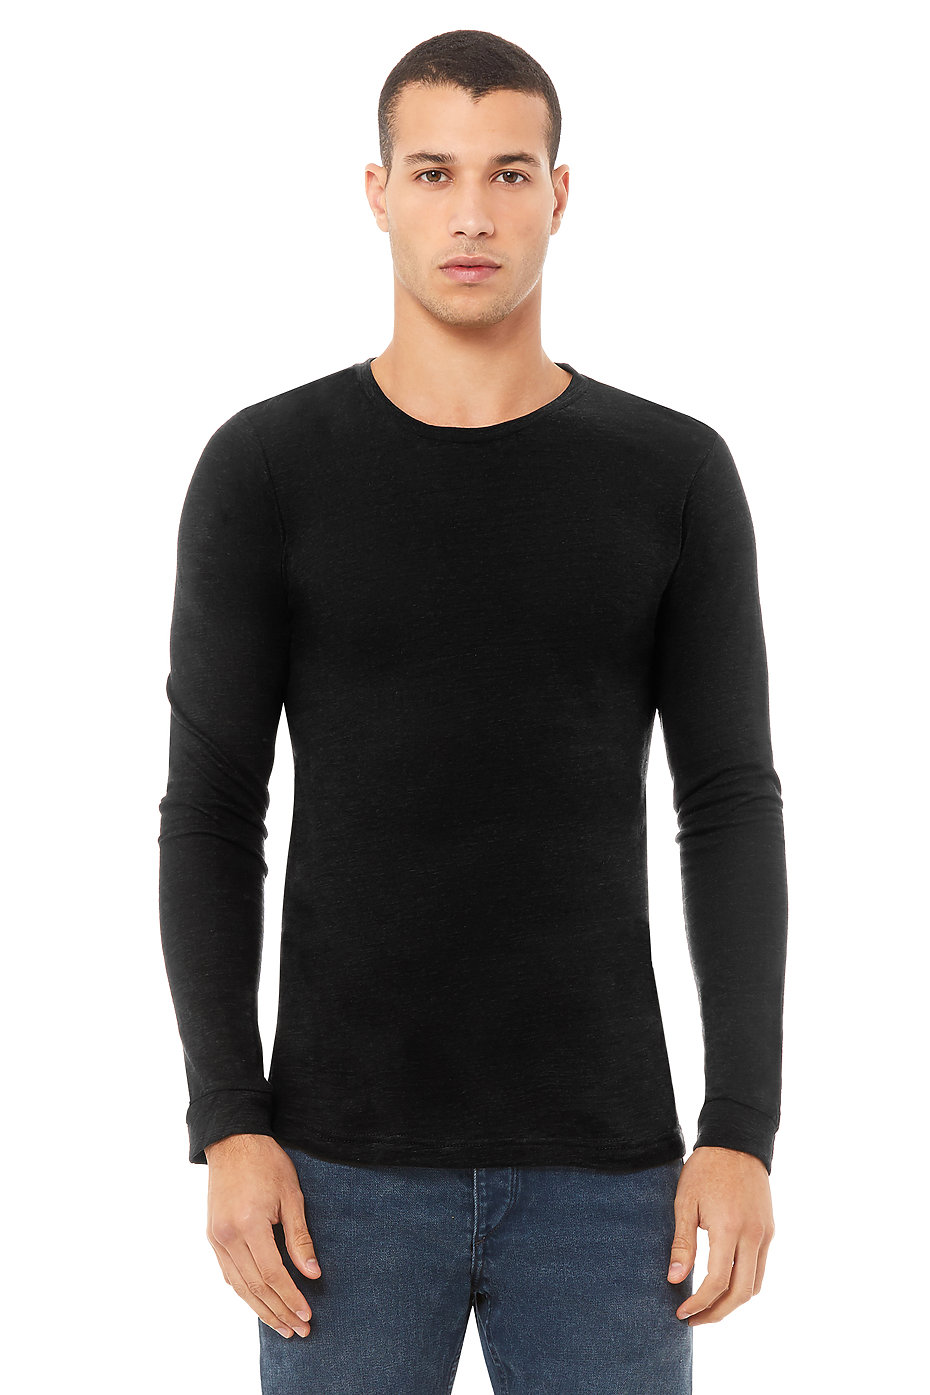 Mens Long Sleeve T Shirts | Unisex Jersey T Shirt | Wholesale Clothing ...